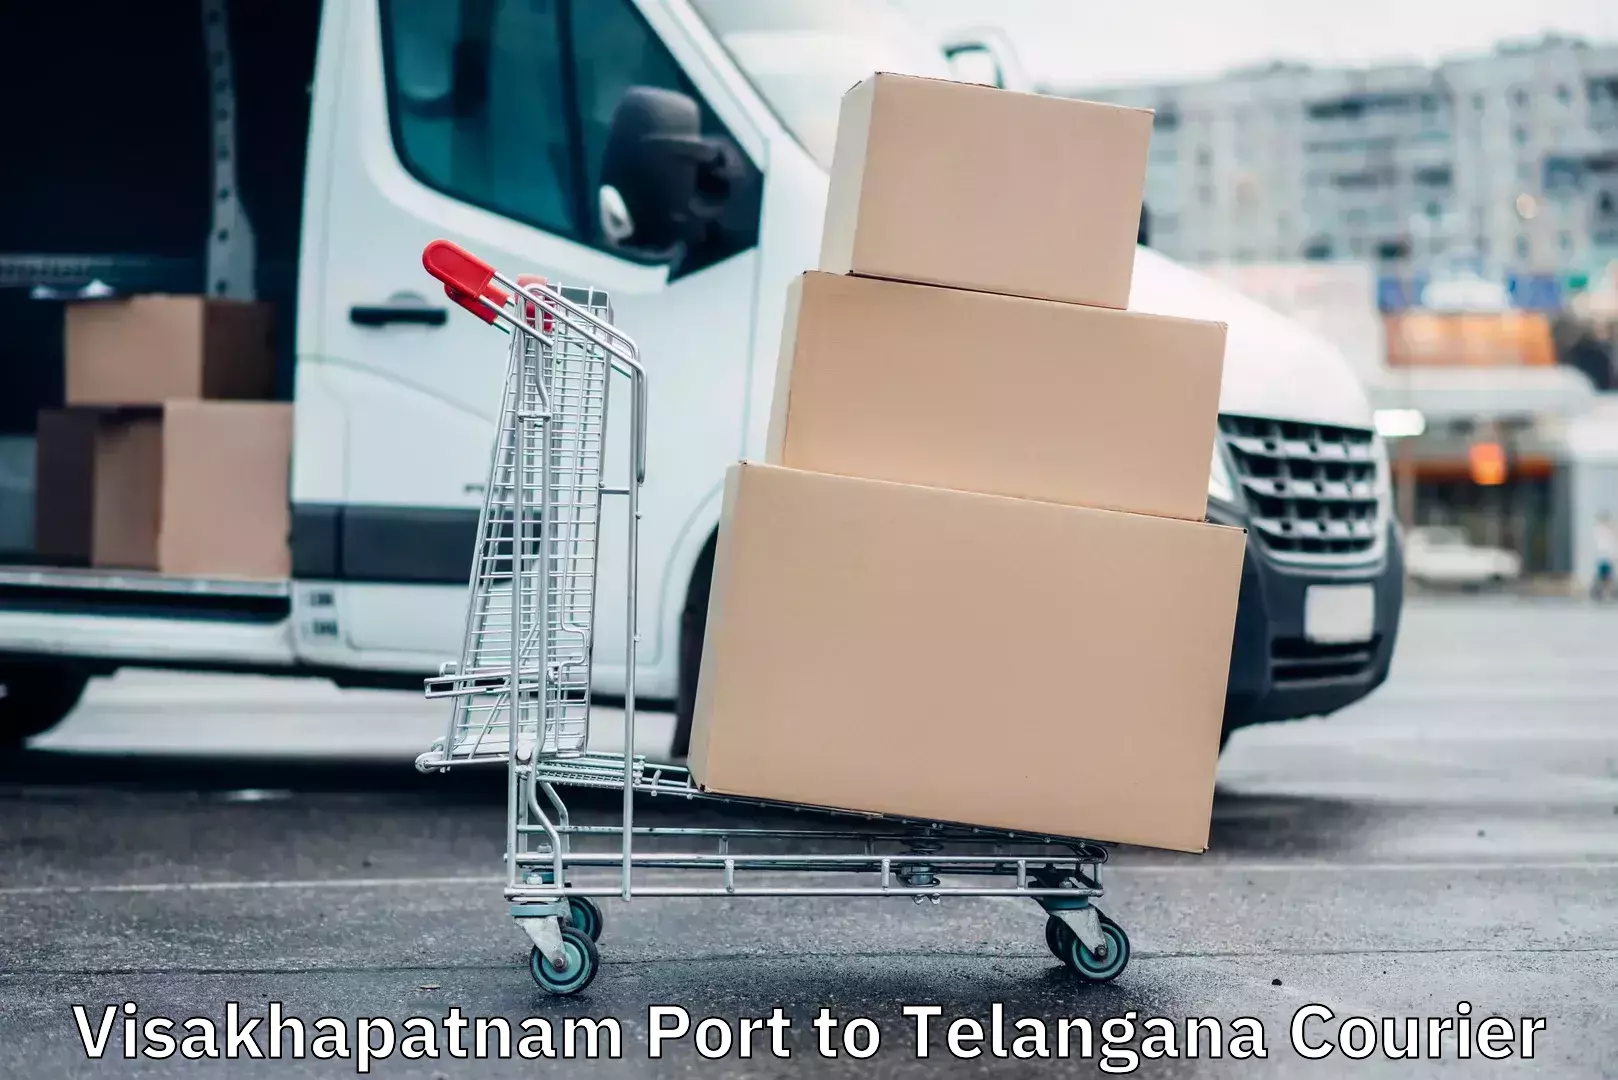 High-performance logistics Visakhapatnam Port to Telangana